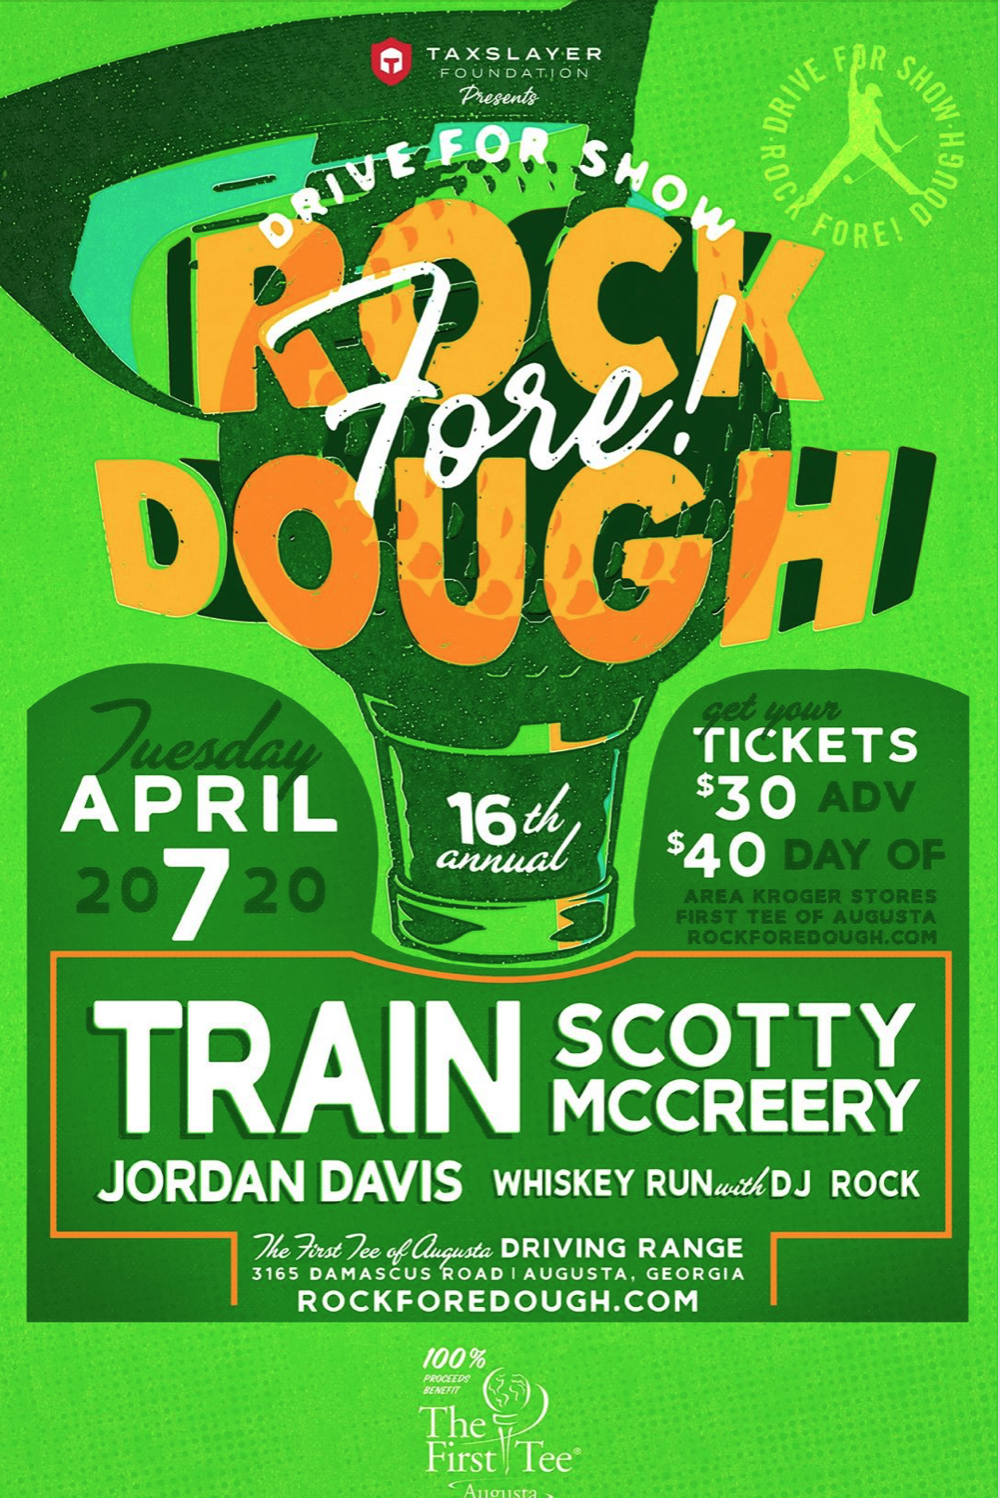 Train, Scotty McCreery, Jordan Davis and Whiskey Run with DJ Rock